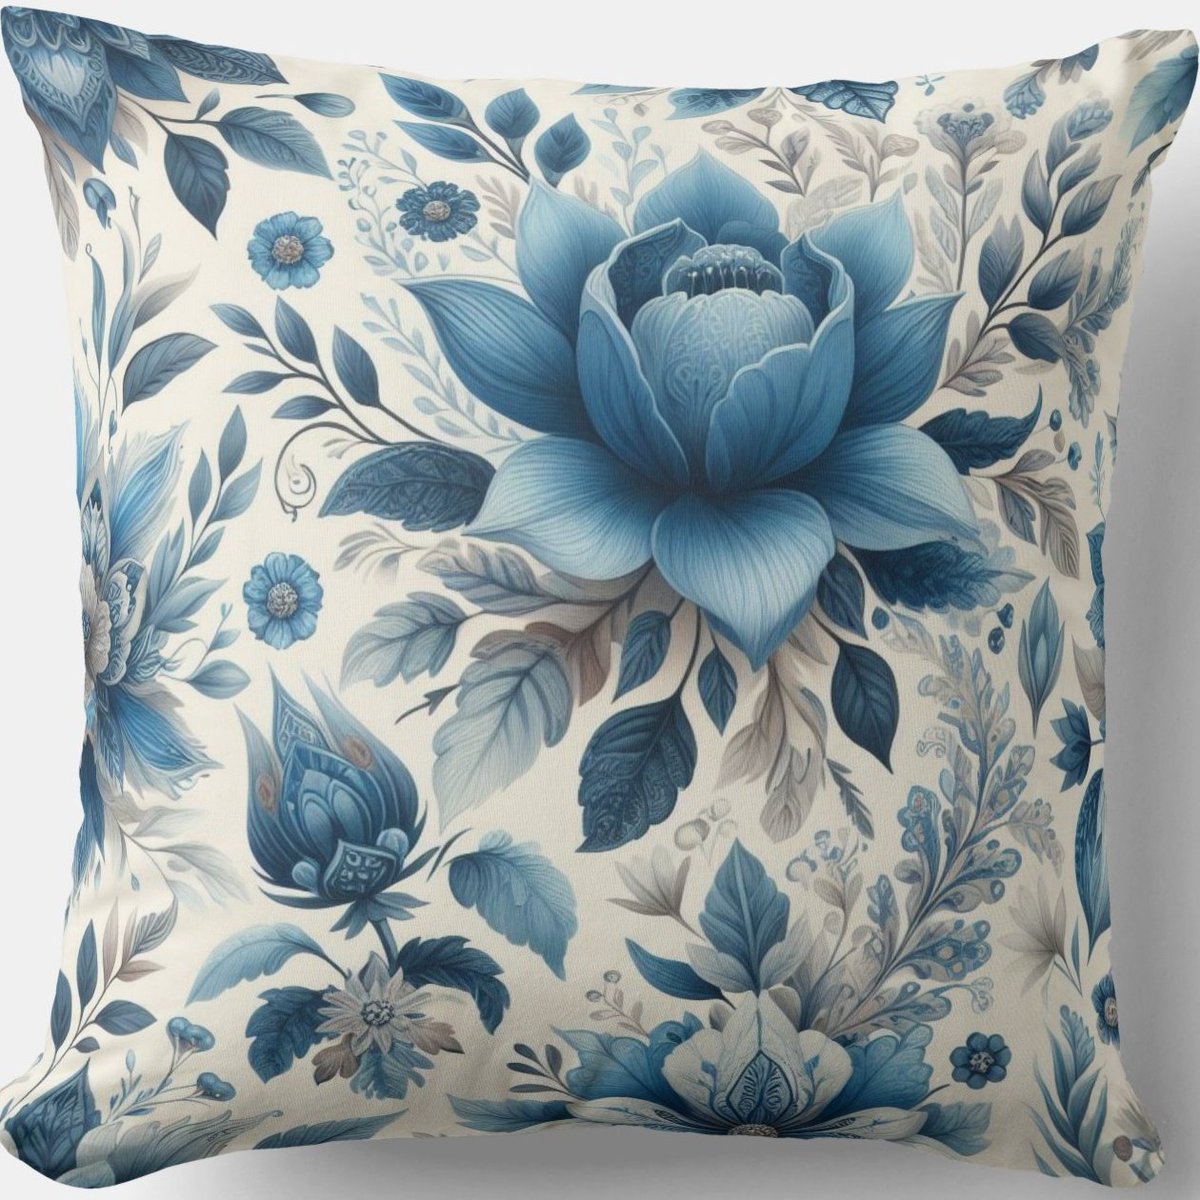 Blue Rose Throw Pillow zazzle.com/elegant_blue_r… The design add an air of elegance #vintage #modern #ArtistOnTwitter #ThrowPillow #homedecoration #interiordesign #pillows #giftideas #pillow #uniquegifts #homedecor #cushion #bedroomdecor #Weddinggift #boho #mothersdaygifts #blue #GN